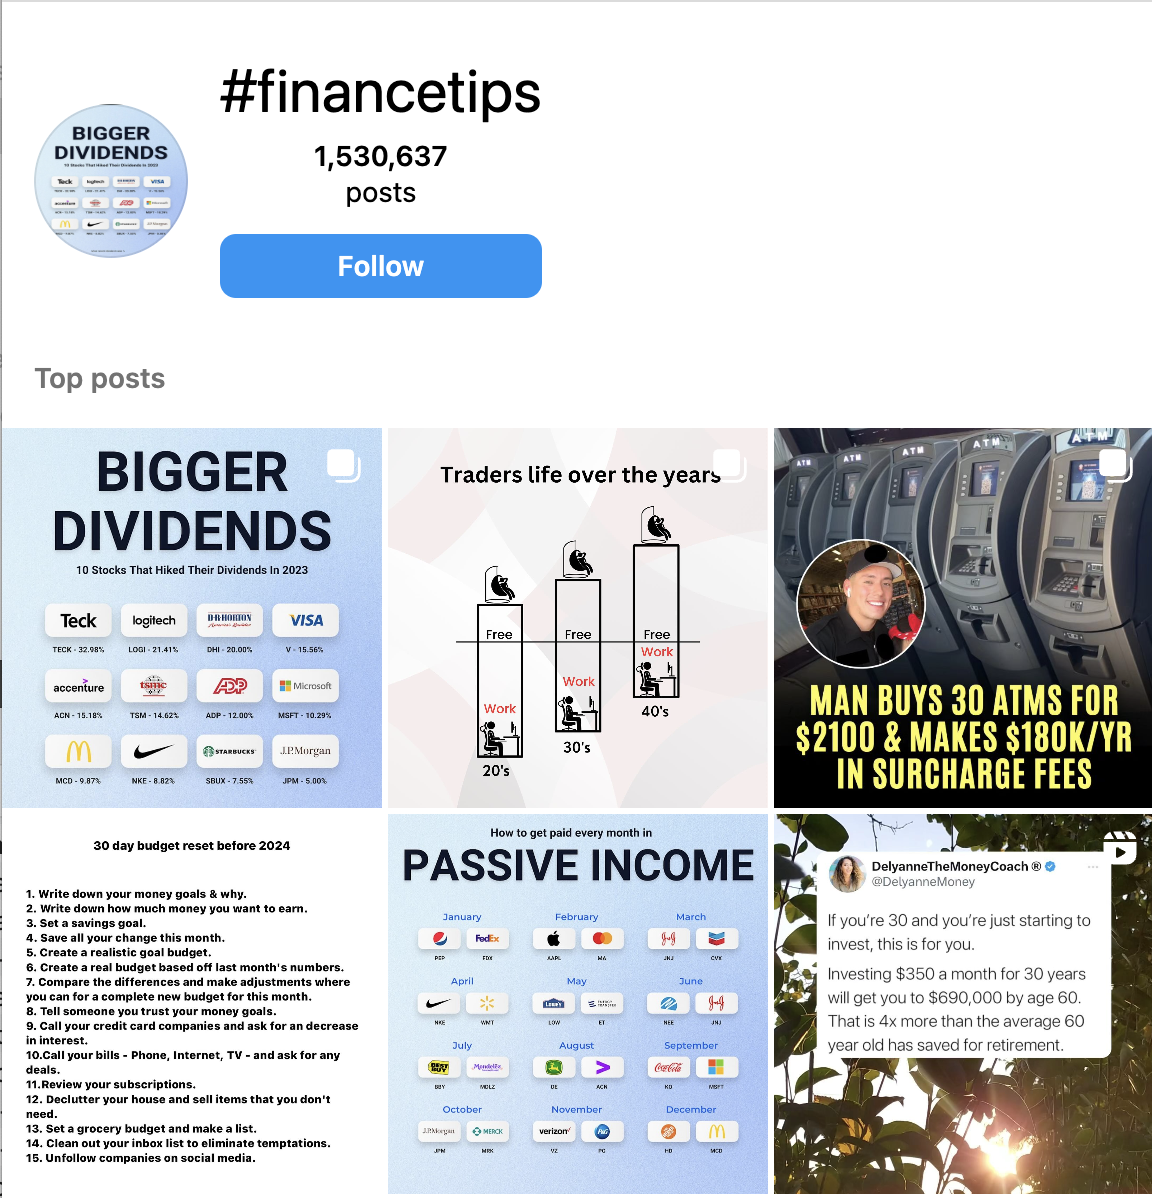 #FinanceTips page on Instagram